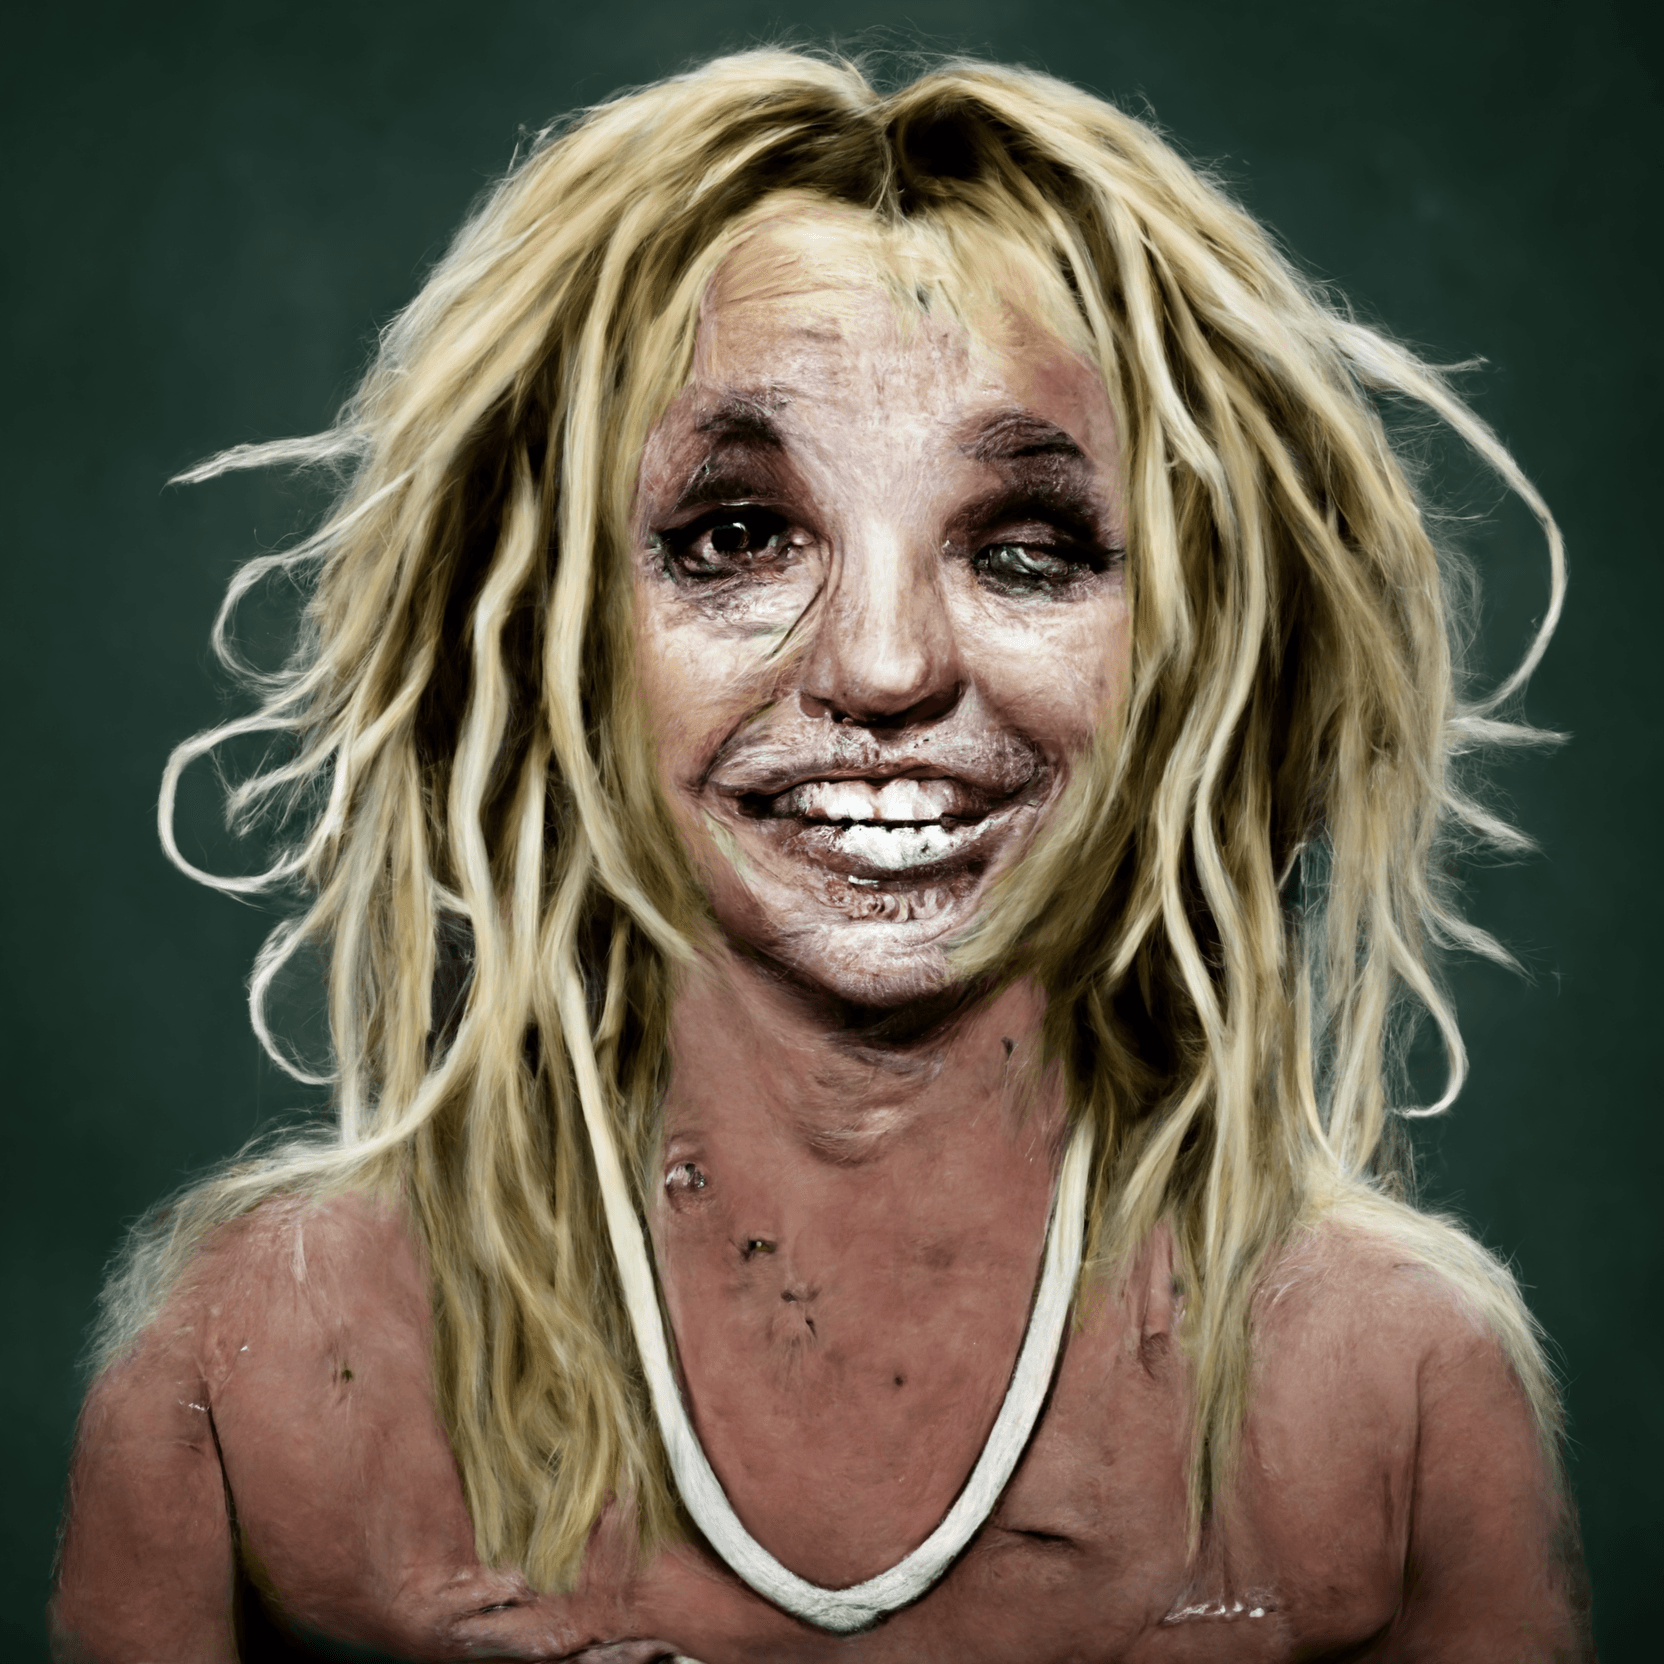 Britney Spears on Crack